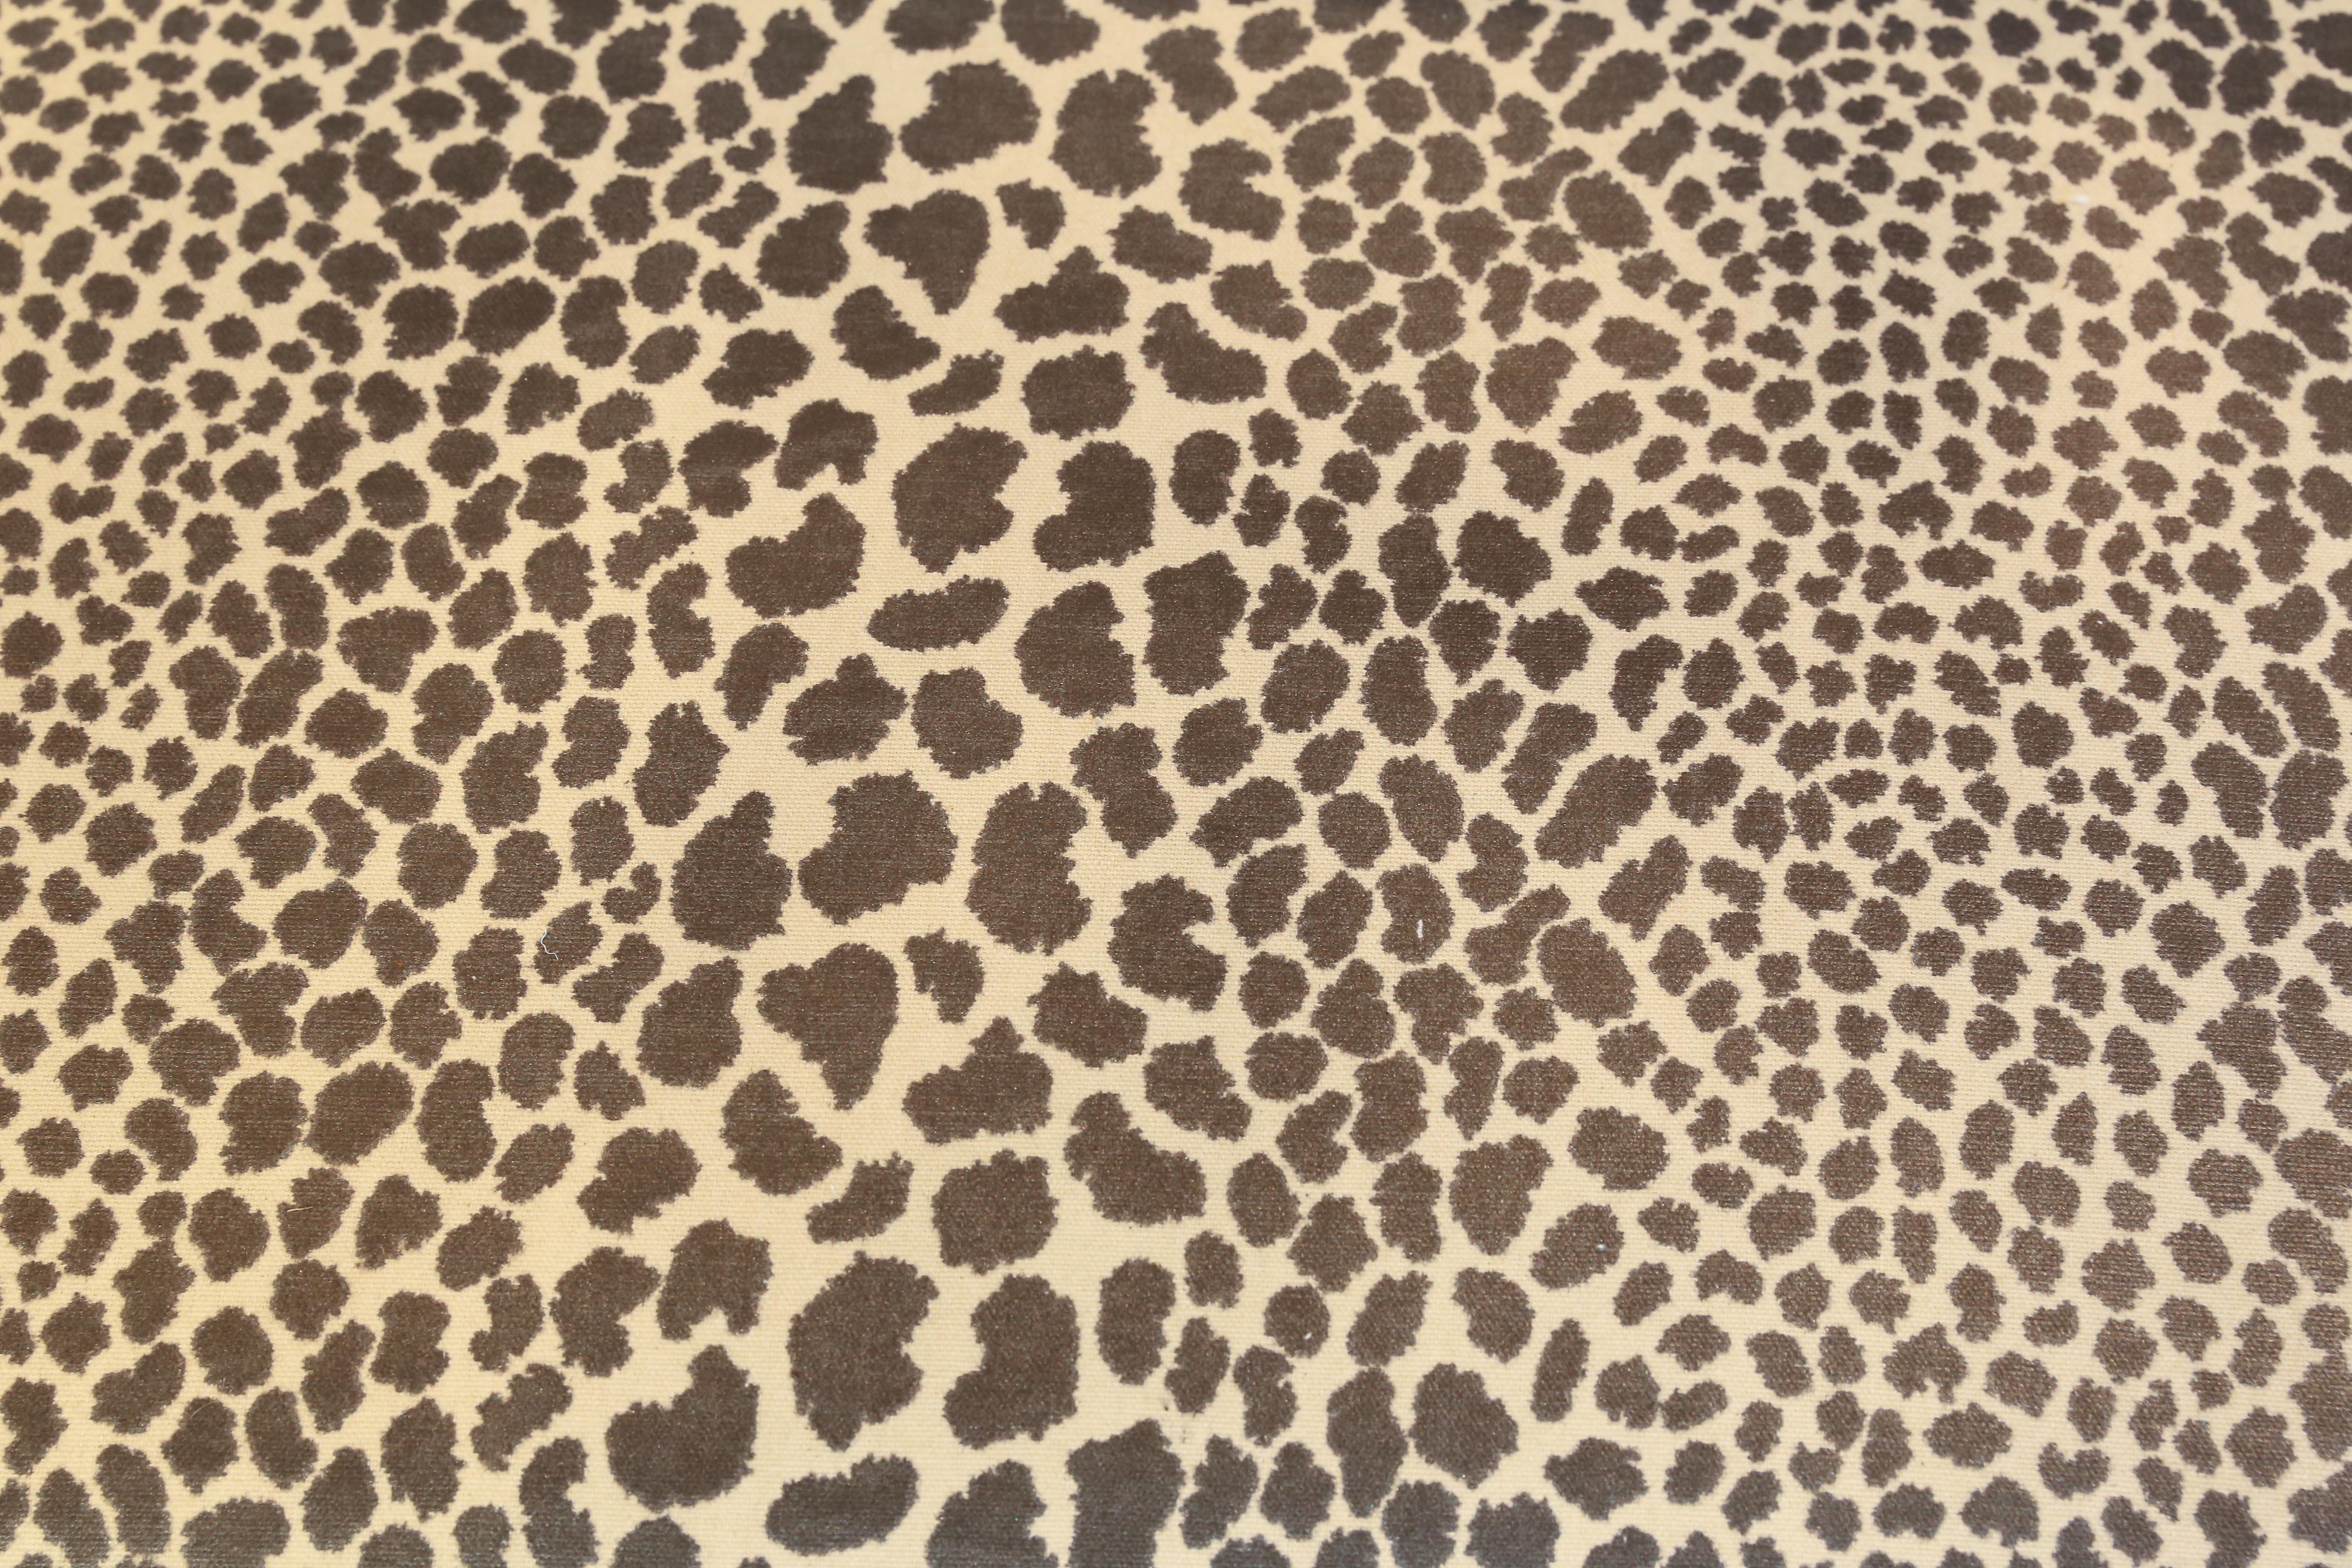 cheetah print bench